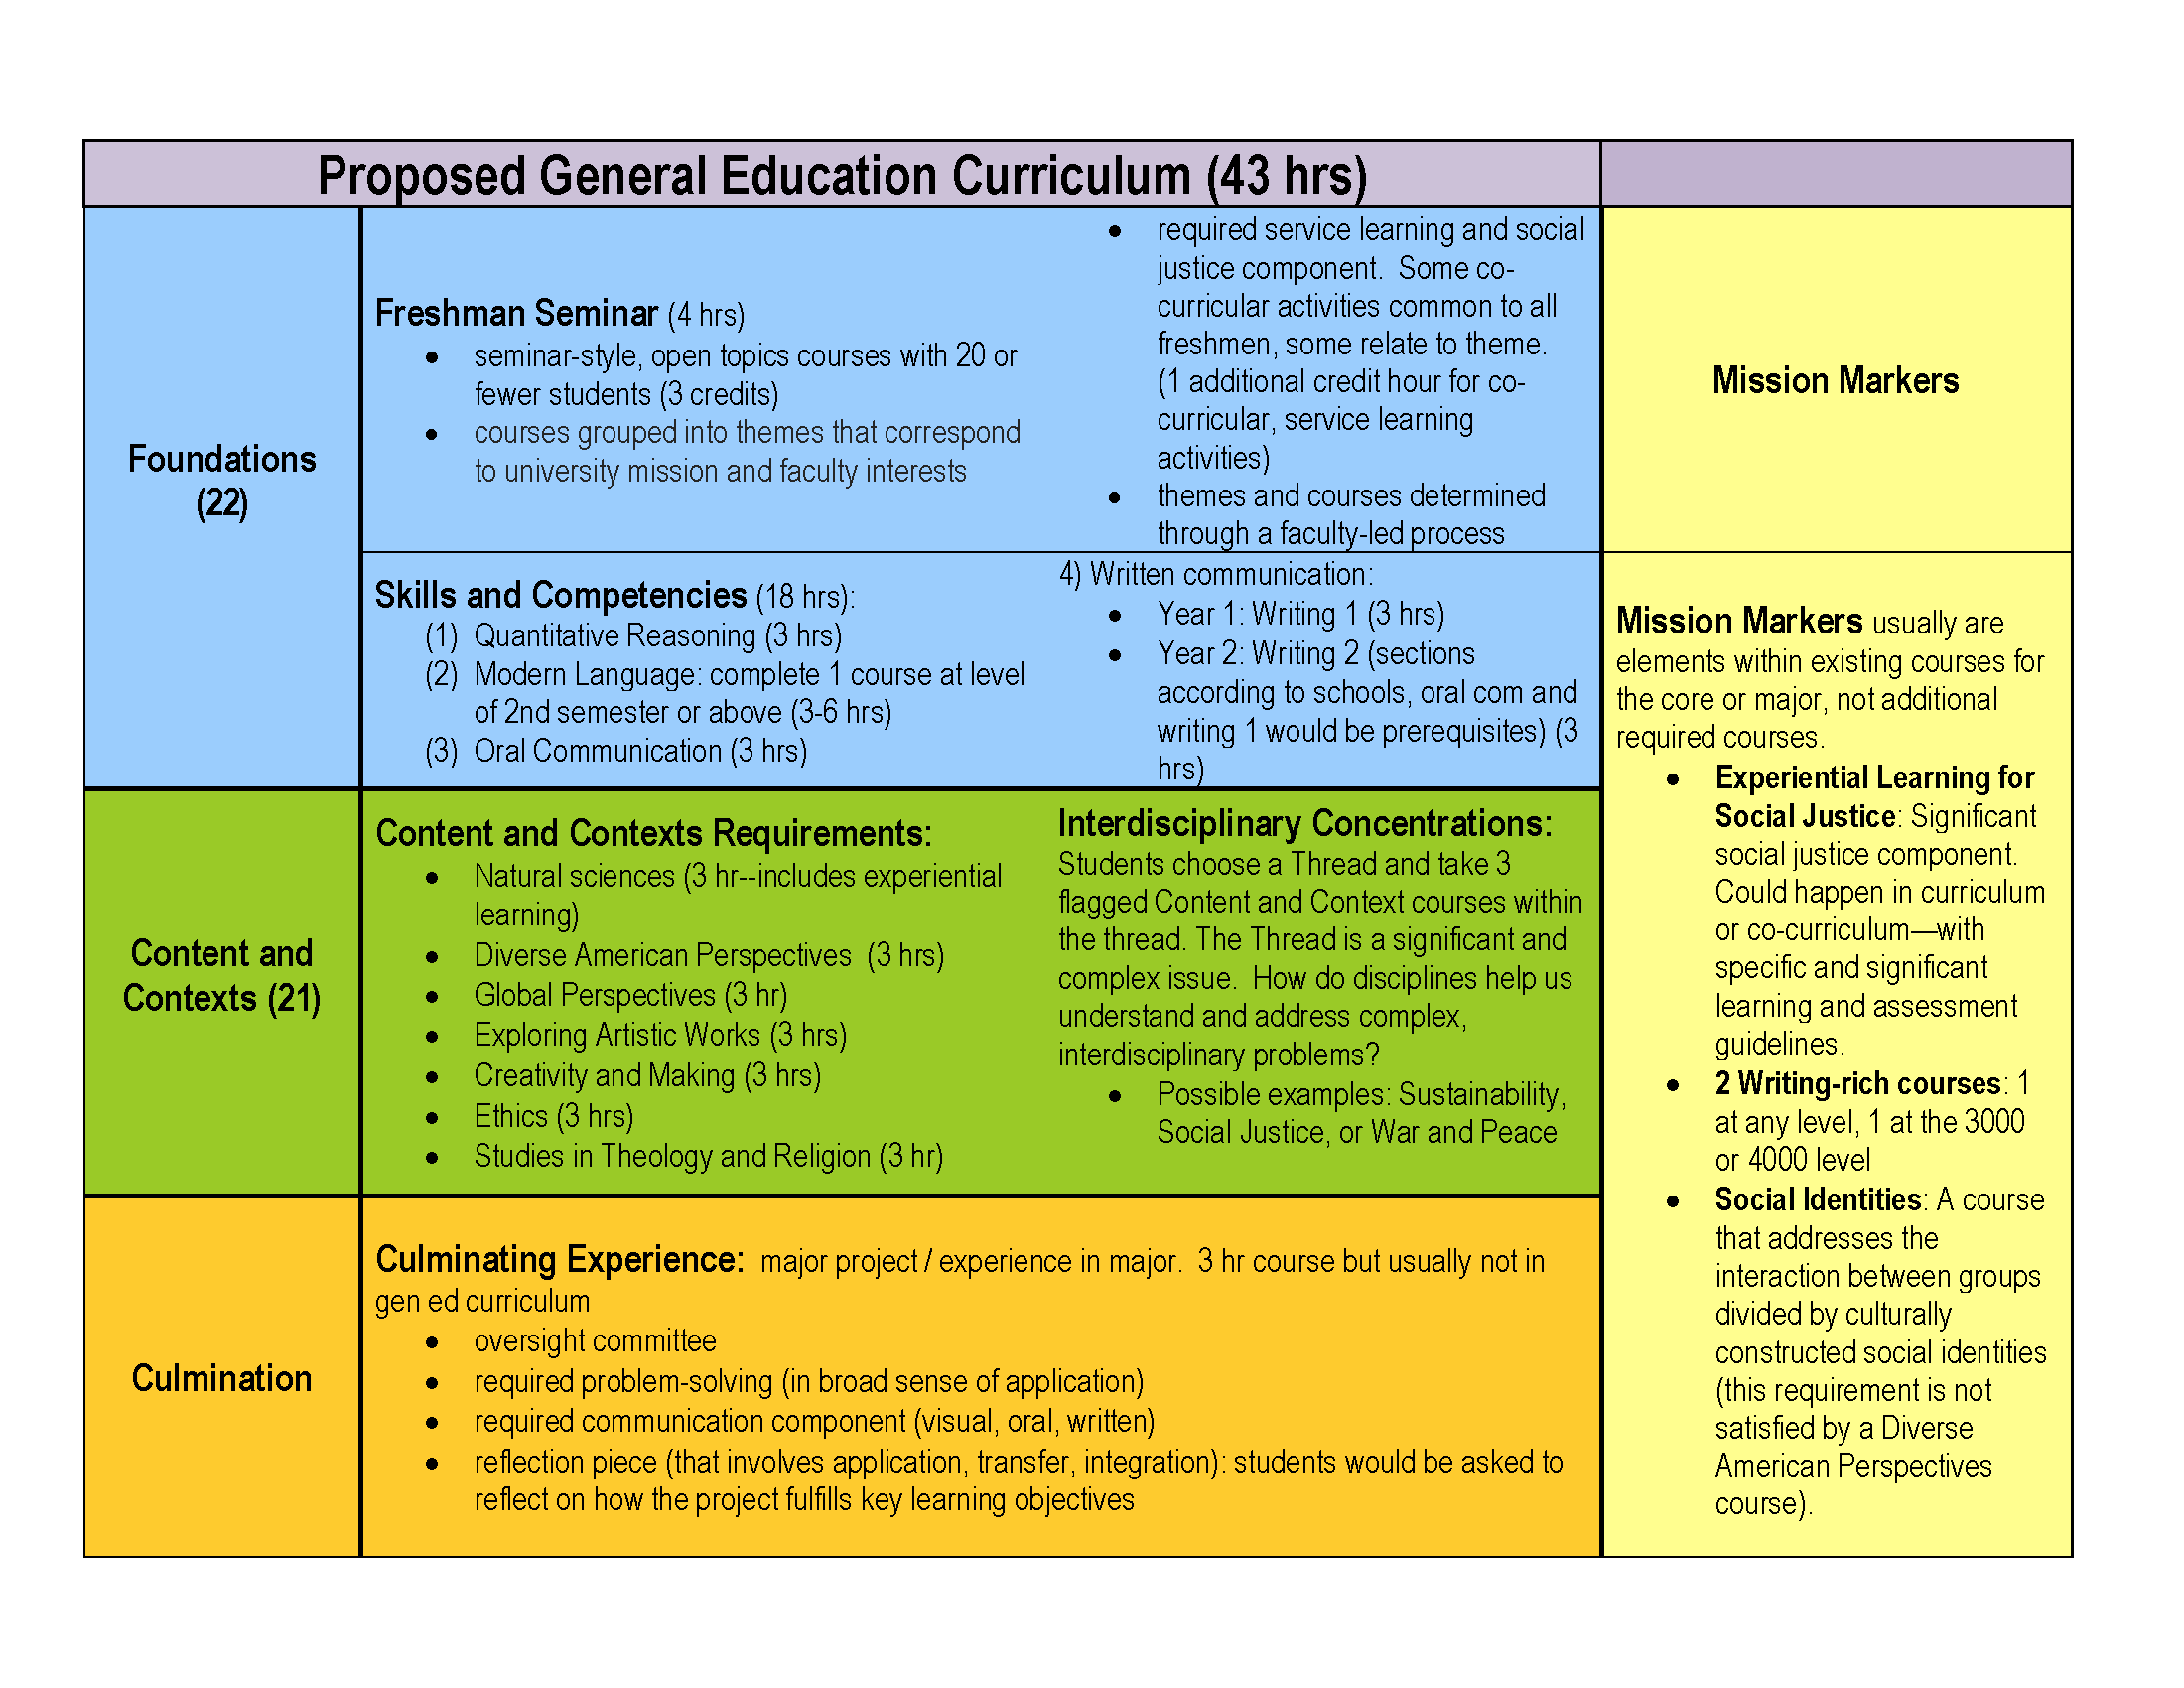 curriculum-framework-general-education-curriculum-renewal-archived